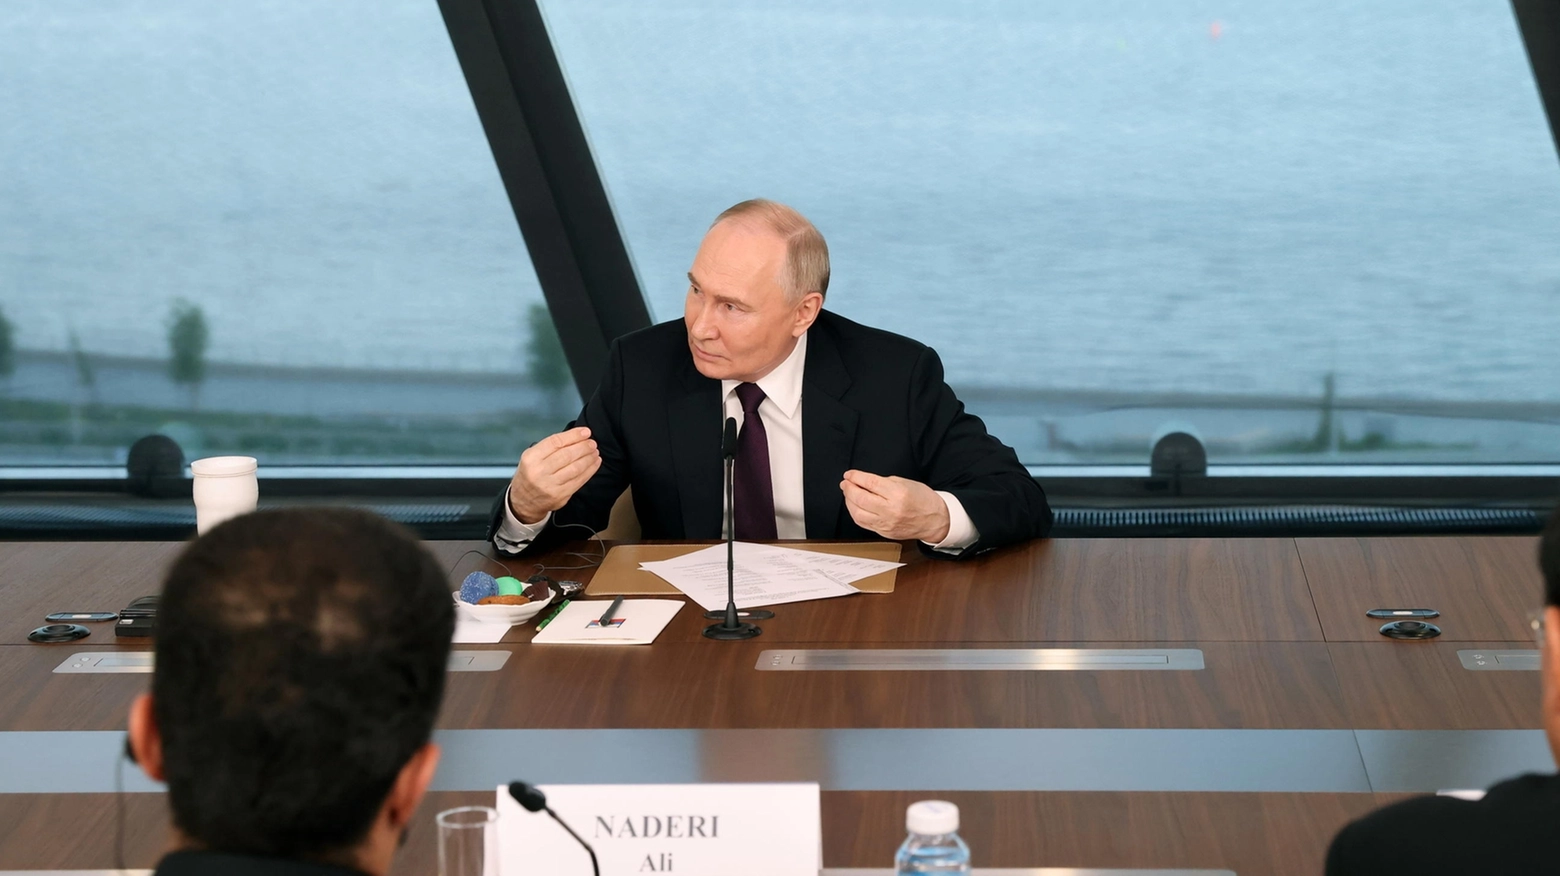 Putin incontra le agenzie stampa internazionali (Ansa)